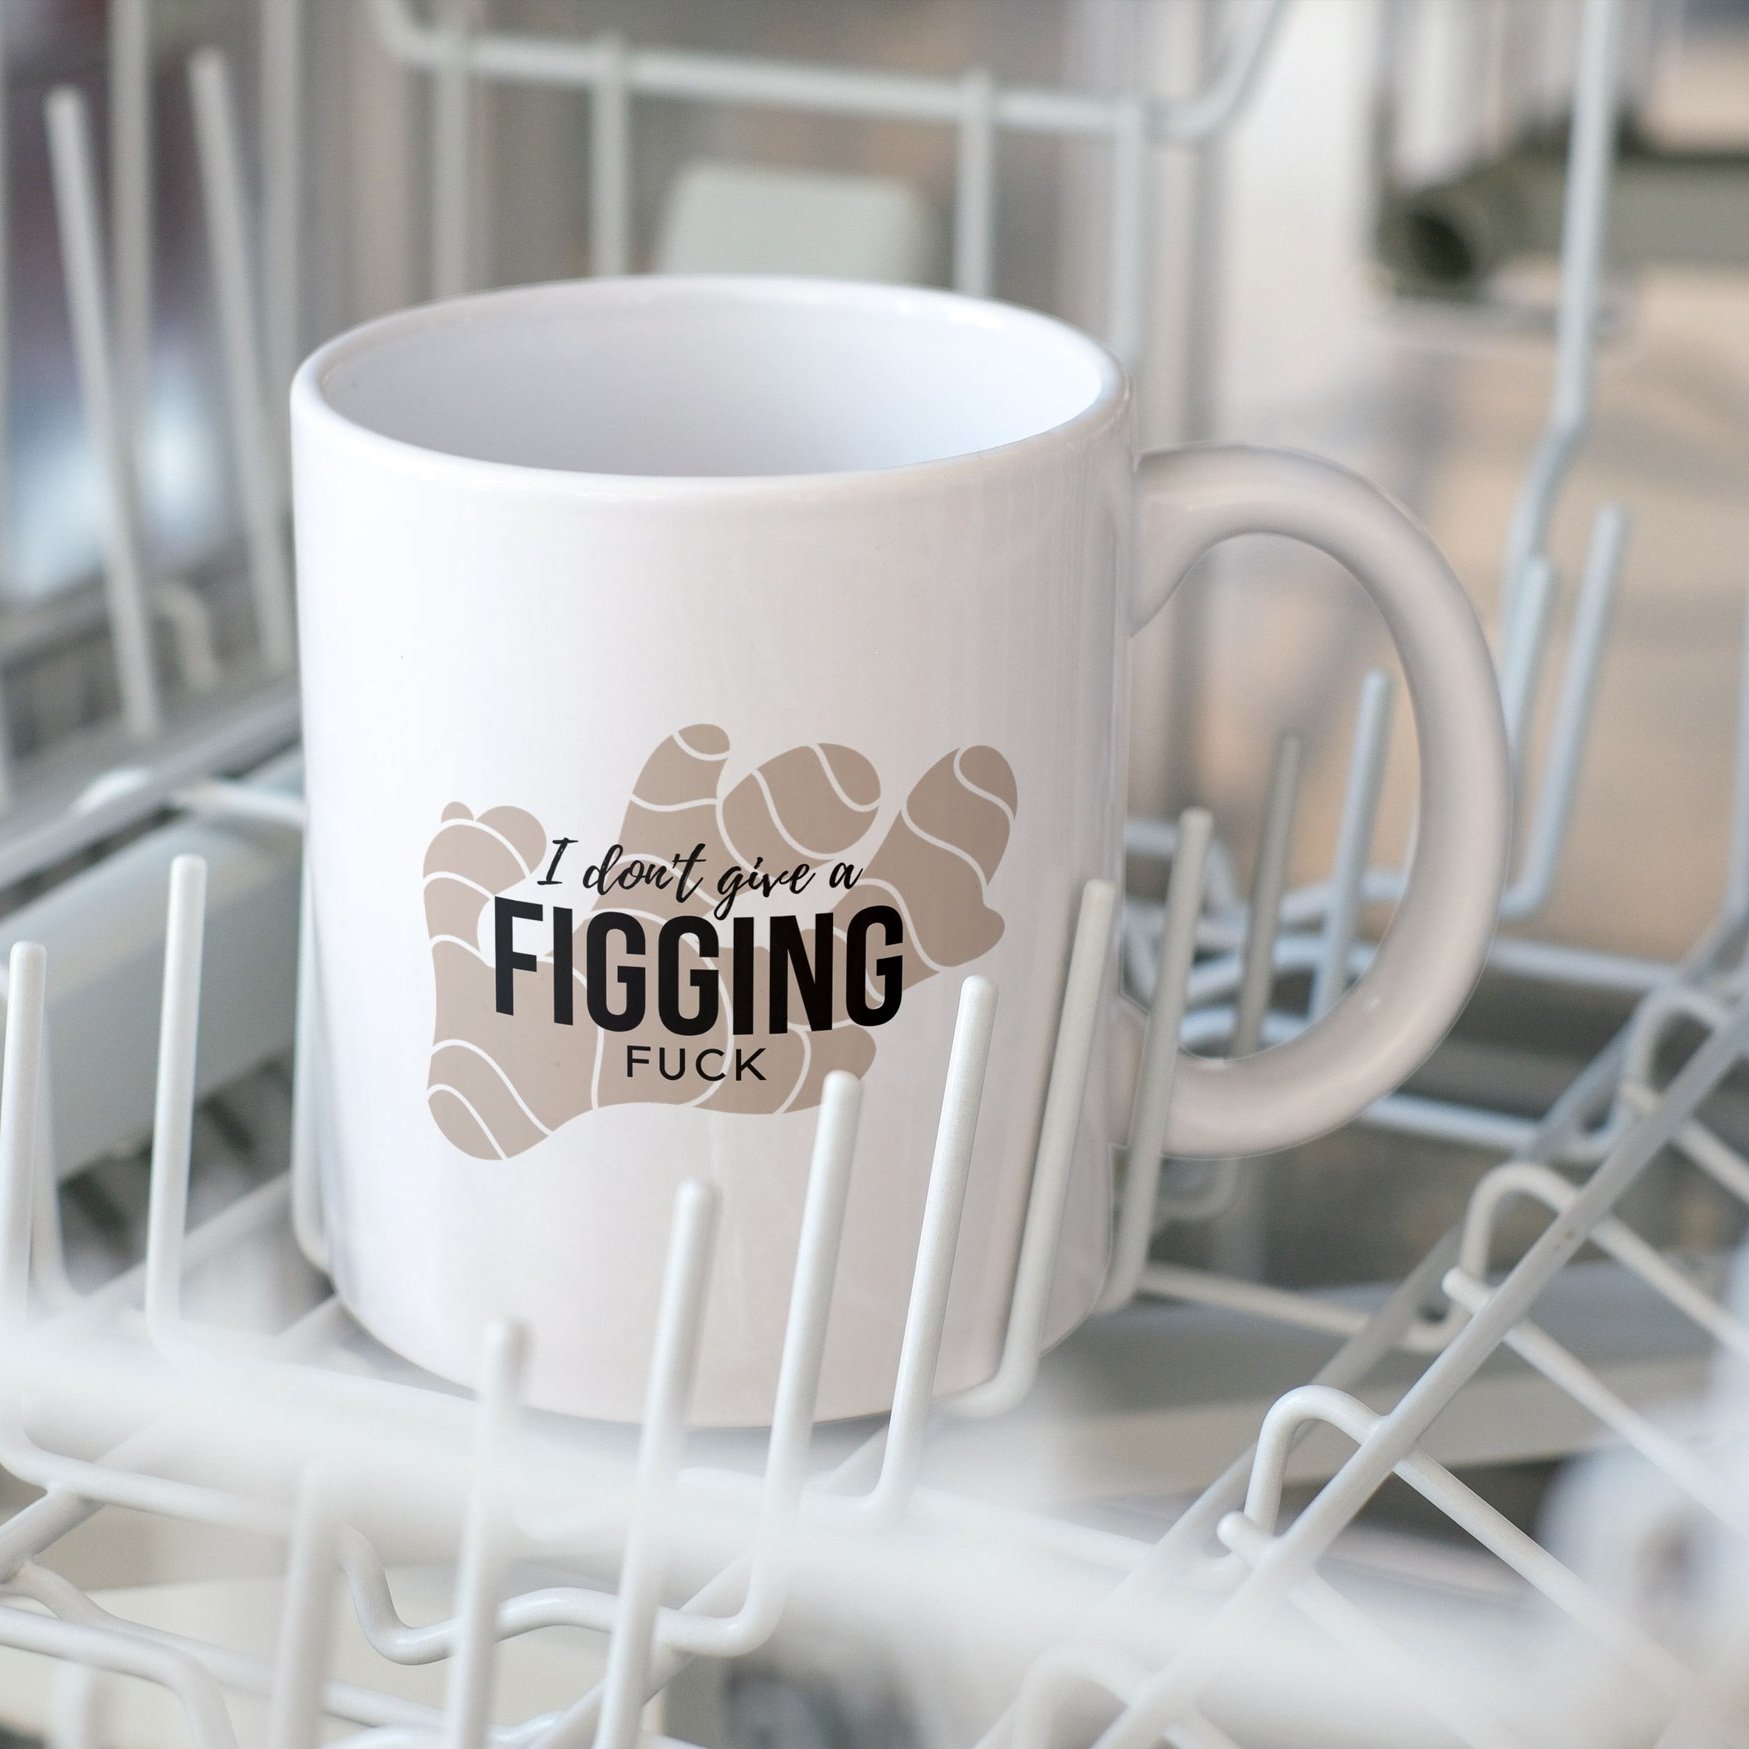 Ceramic-mug-in-the-dishwasher_i-don%27t-give-a-figging-fuck.jpg